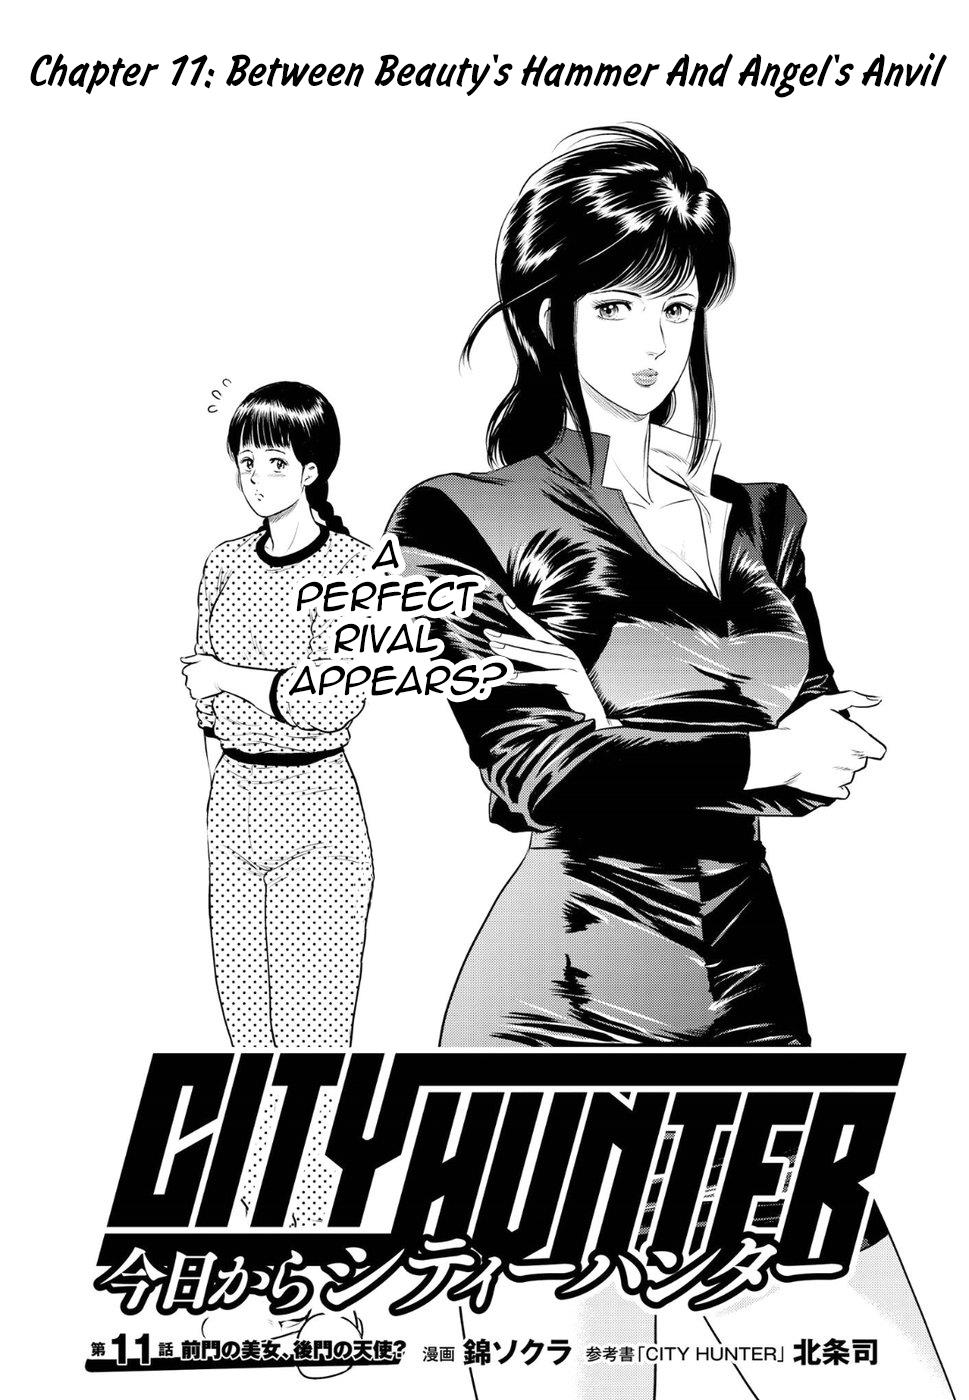 City Hunter - Rebirth - Page 1